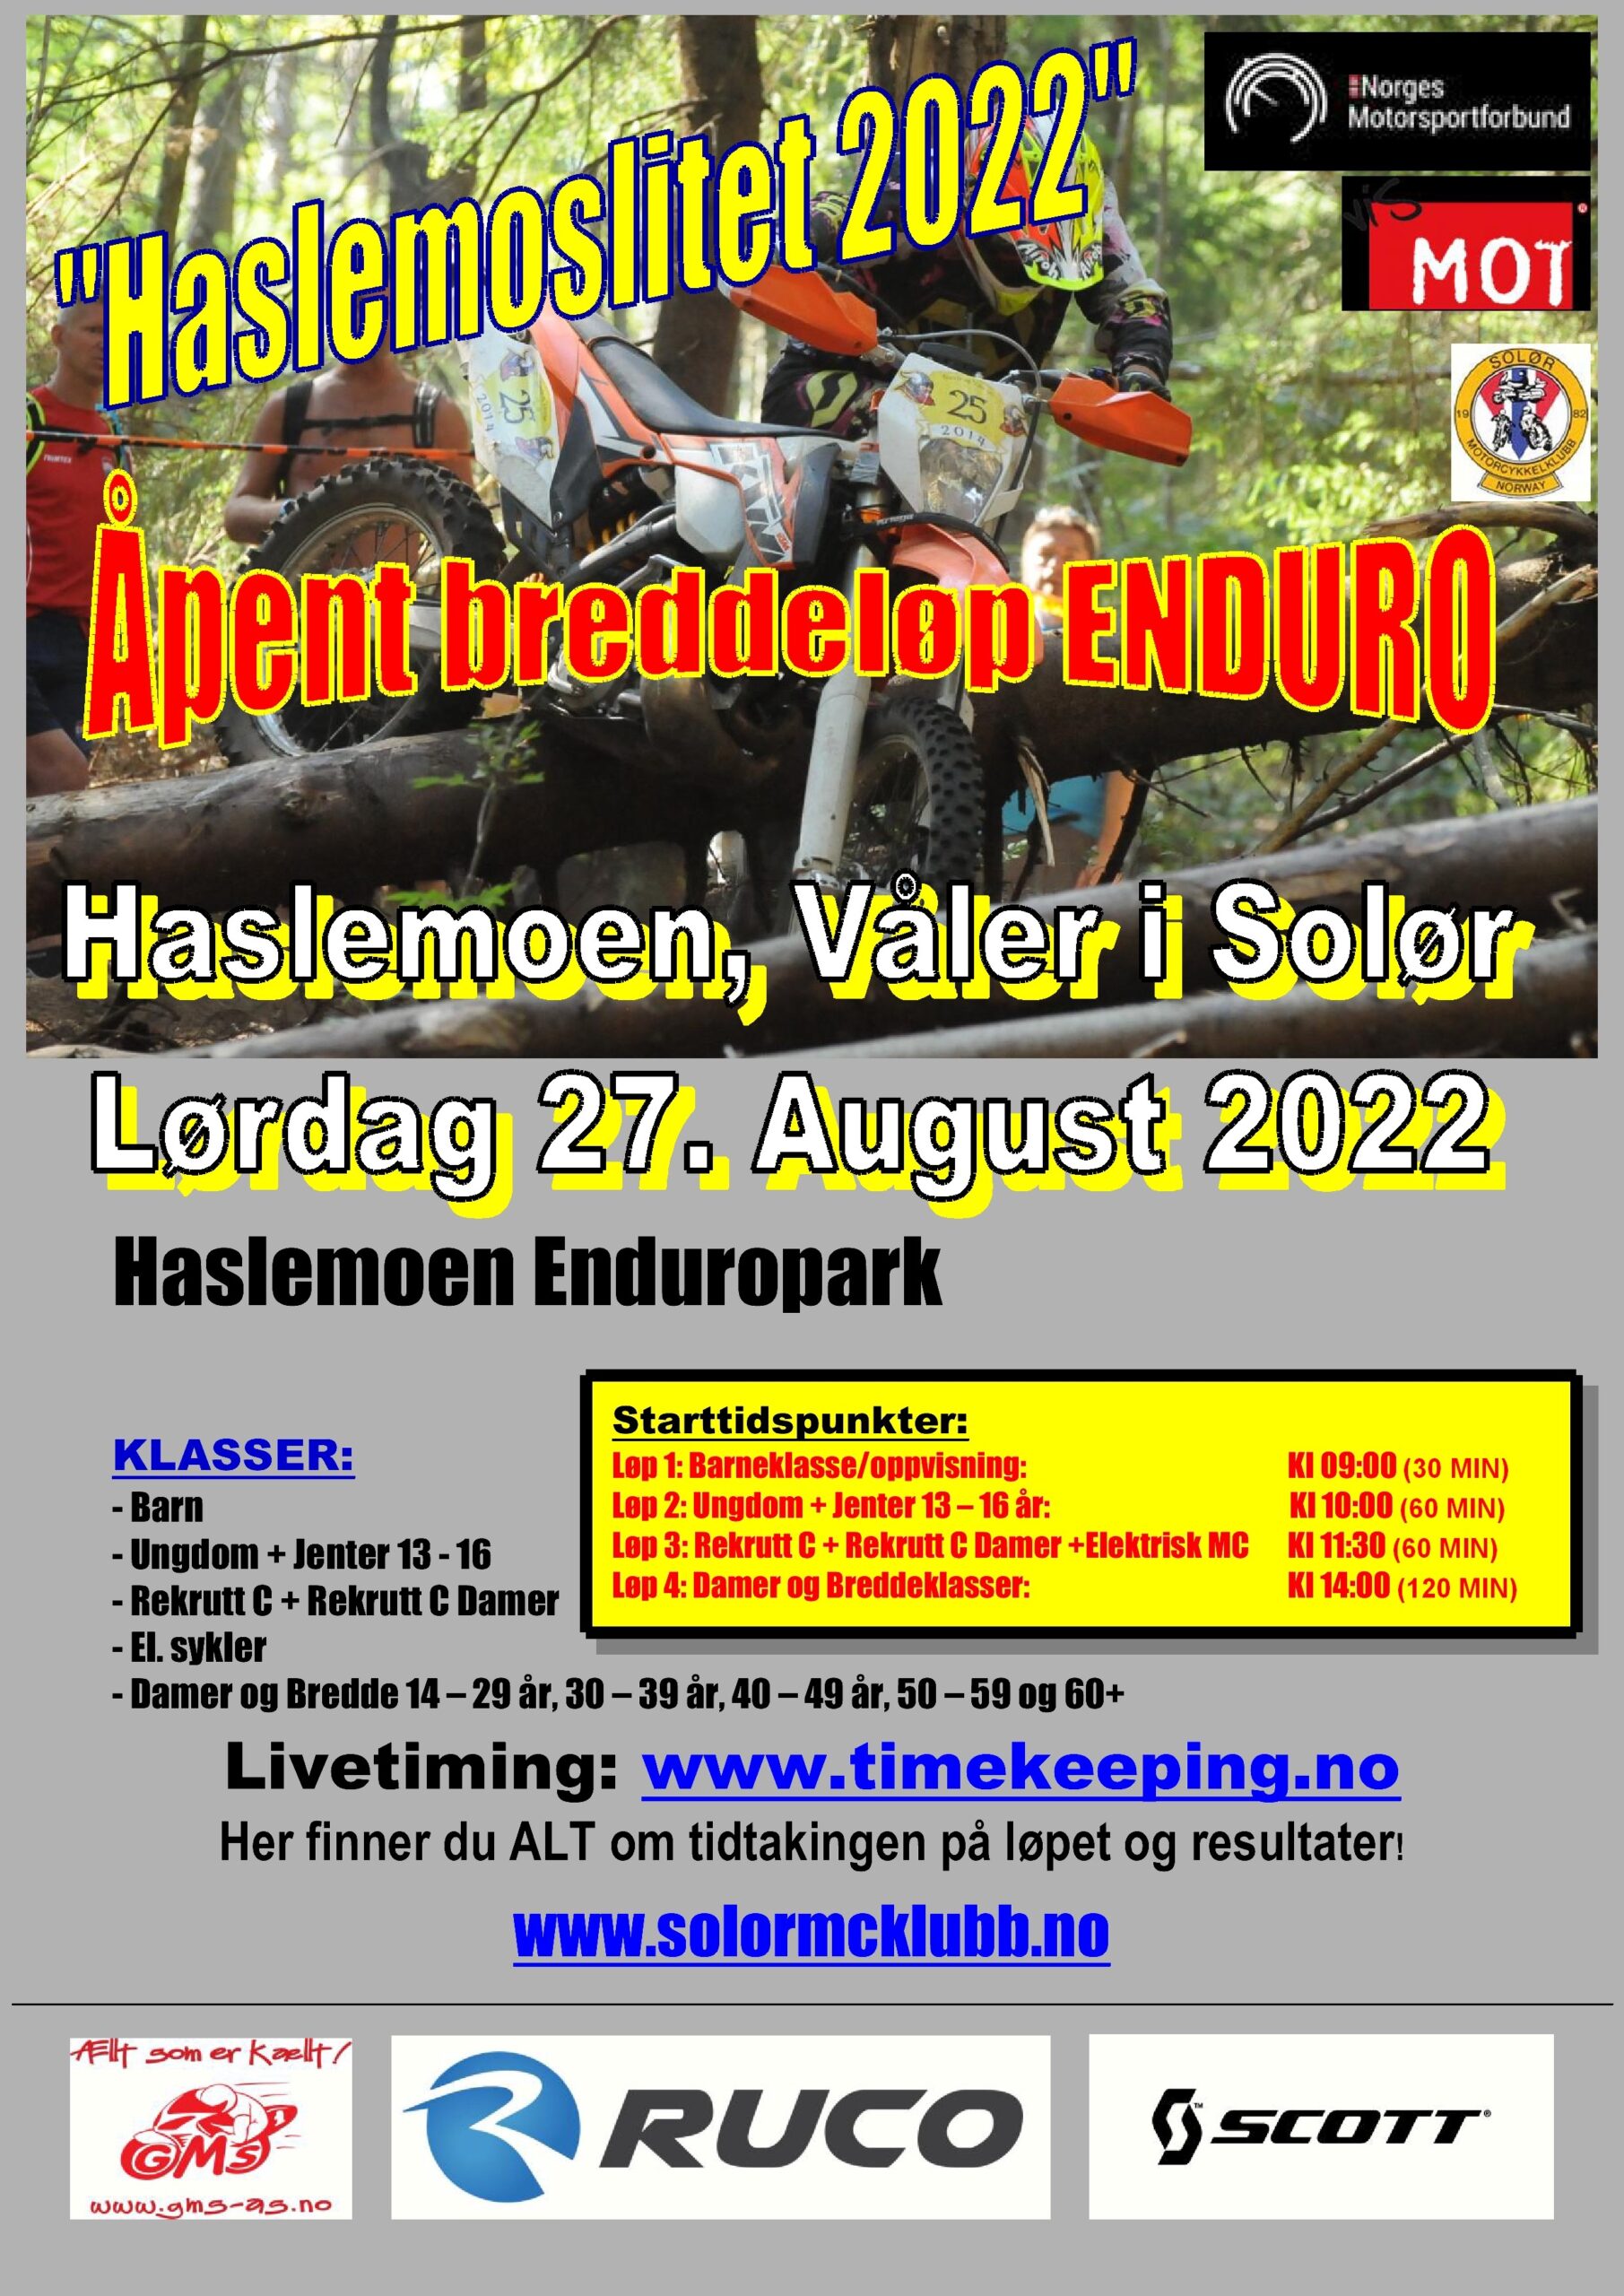 4 - Poster Haslemoslitet 2022 - 27.08.2022